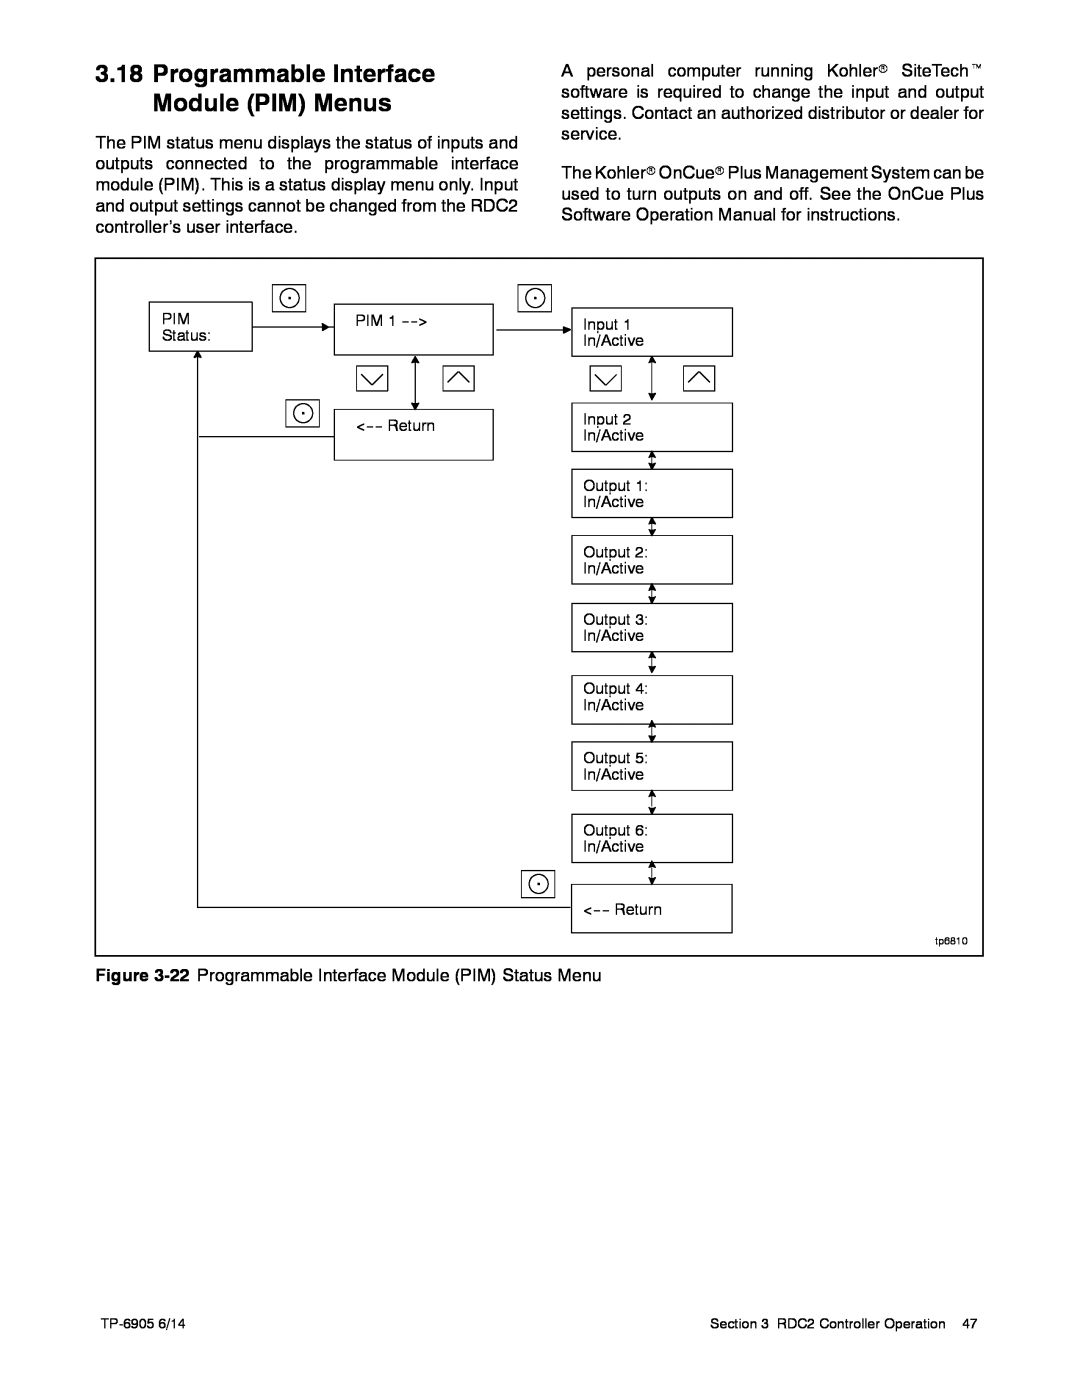 Kohler 24RCL manual 3.18Programmable Interface Module PIM Menus 